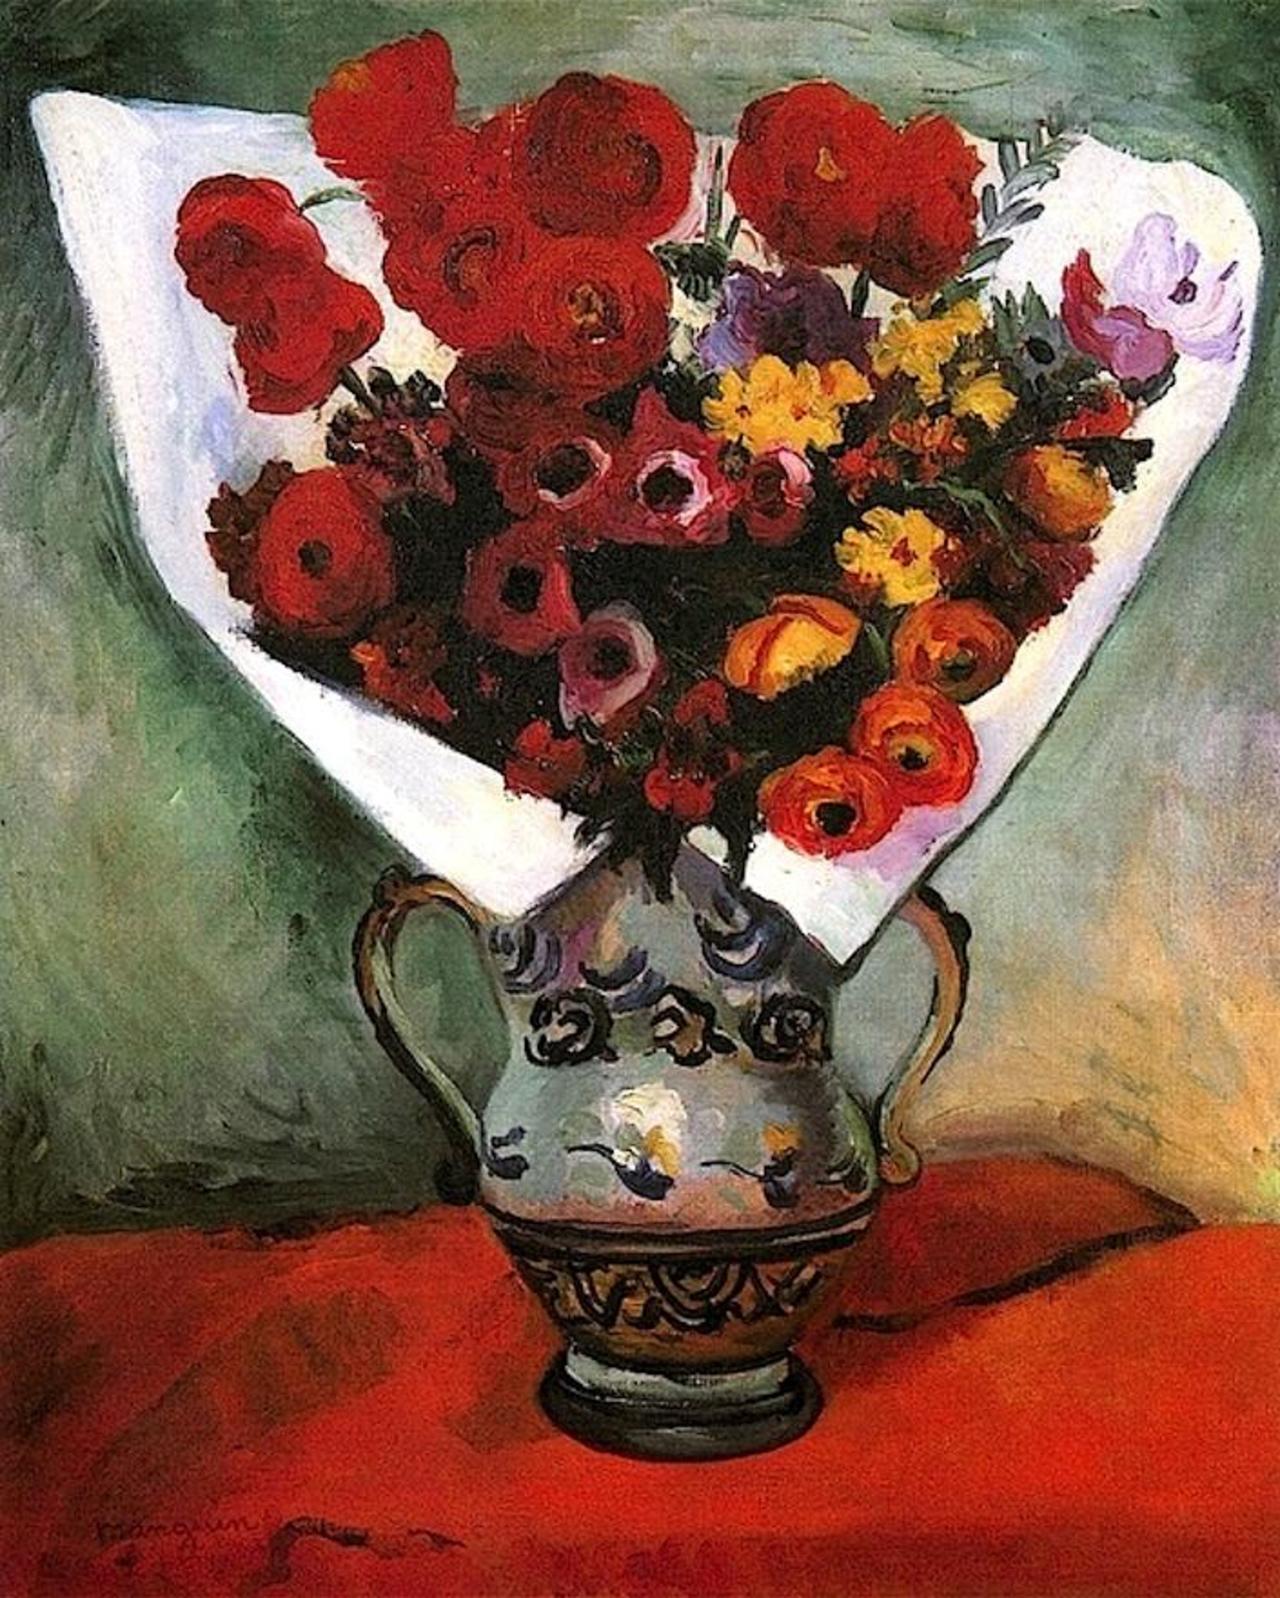 Henri  #Manguin  "Wrapped Bouquet " 1909  #art #iloveart #fineart #painting #followart #artwit http://t.co/nBfS8GDm4O